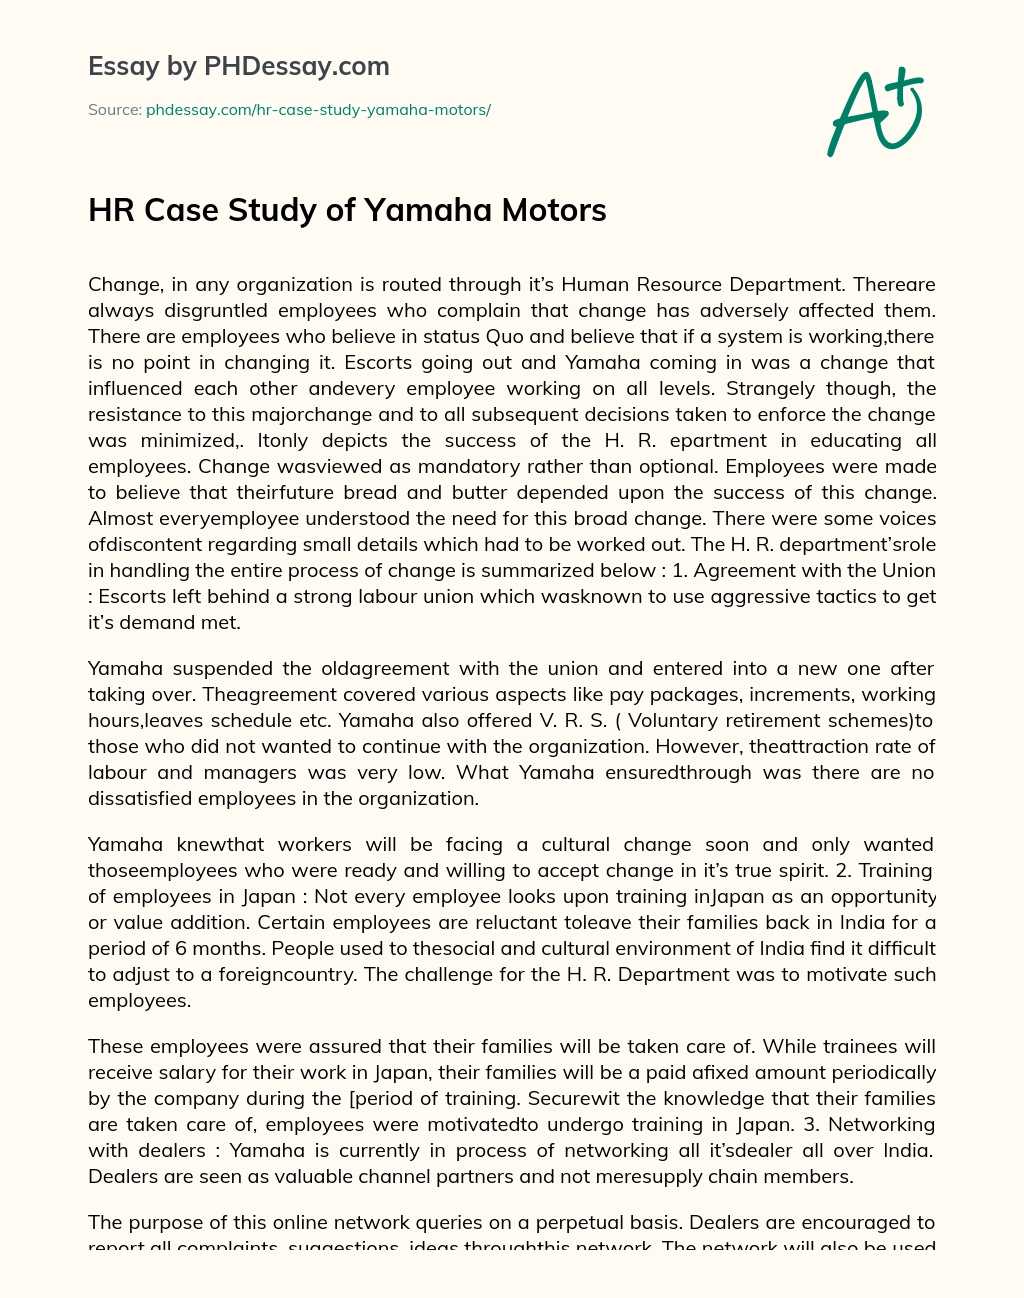 Case Study of Yamaha Motors essay